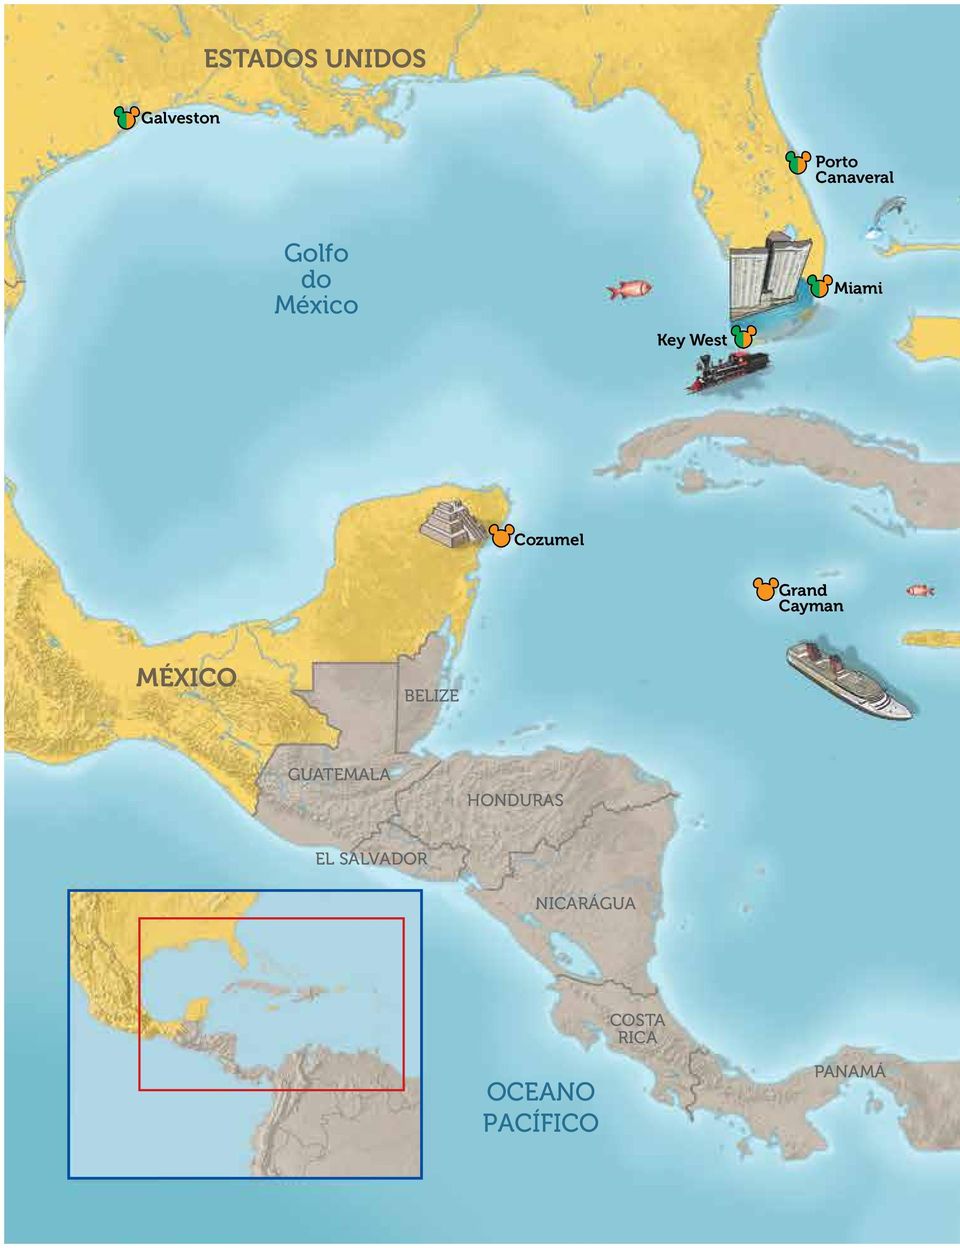 Cayman MÉXICO BELIZE GUATEMALA HONDURAS EL